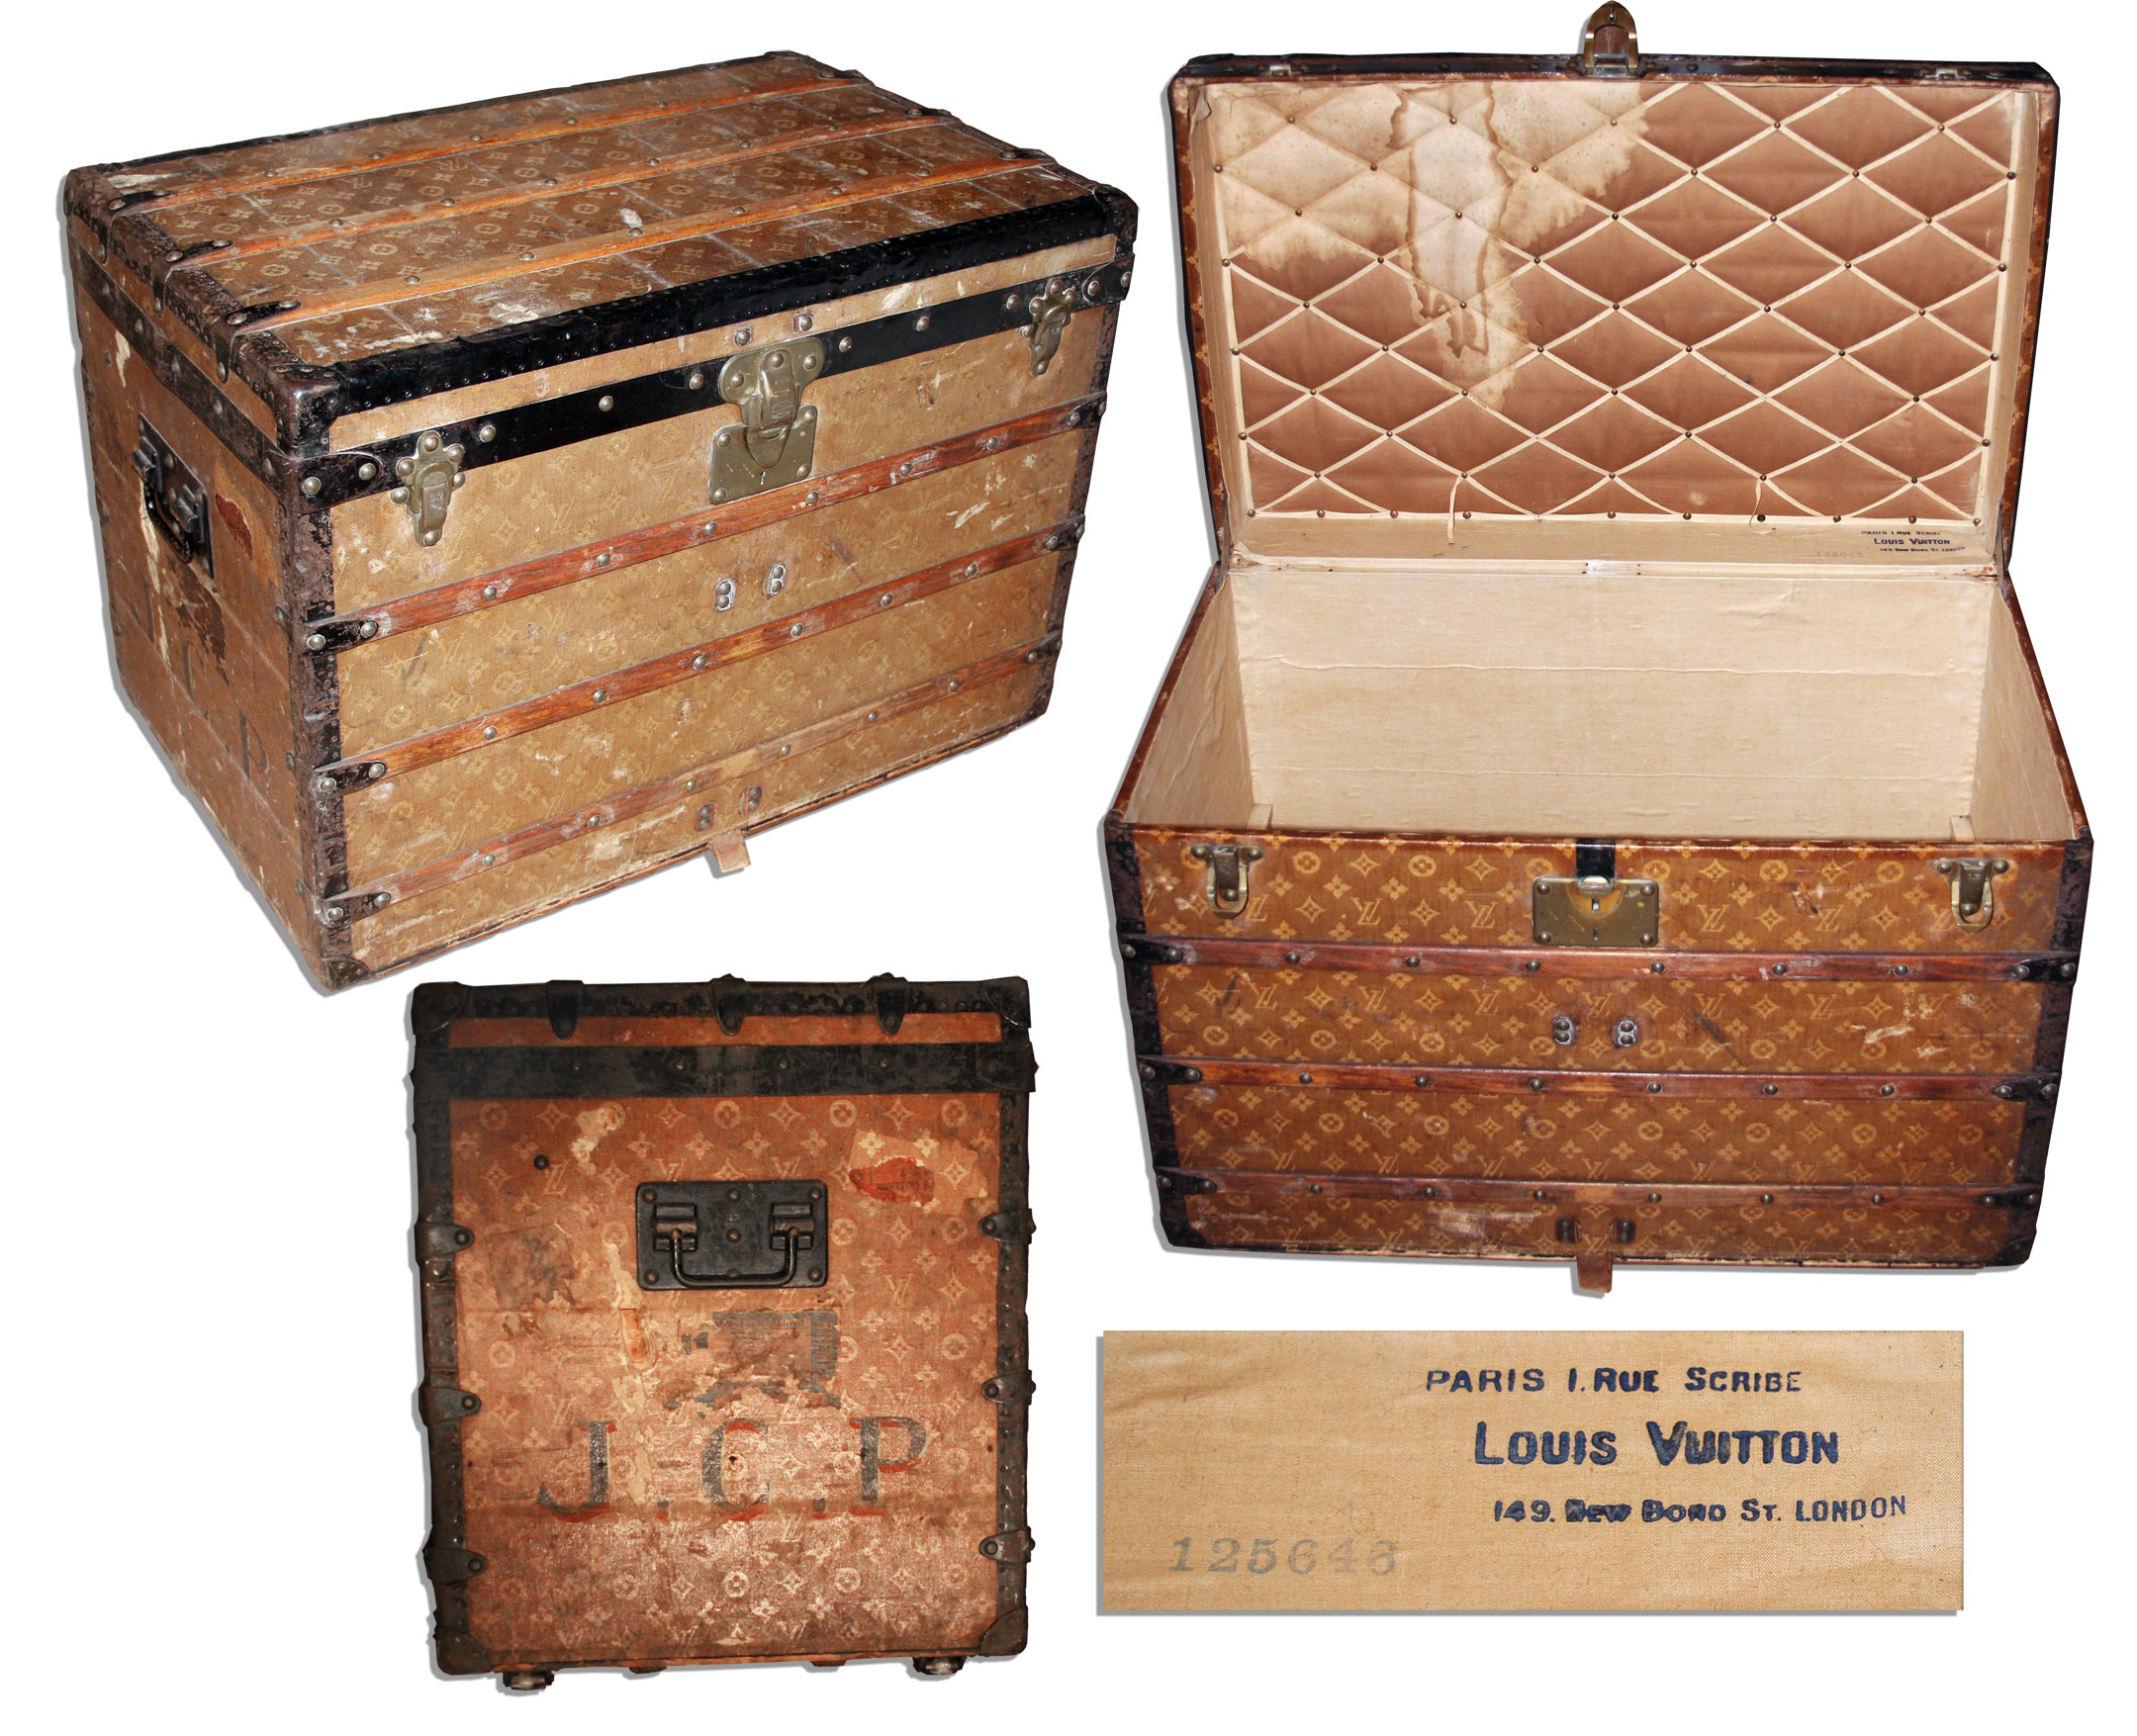 Sell Your Original, Vintage Louis Vuitton Trunk at Nate D. Sanders Auctions